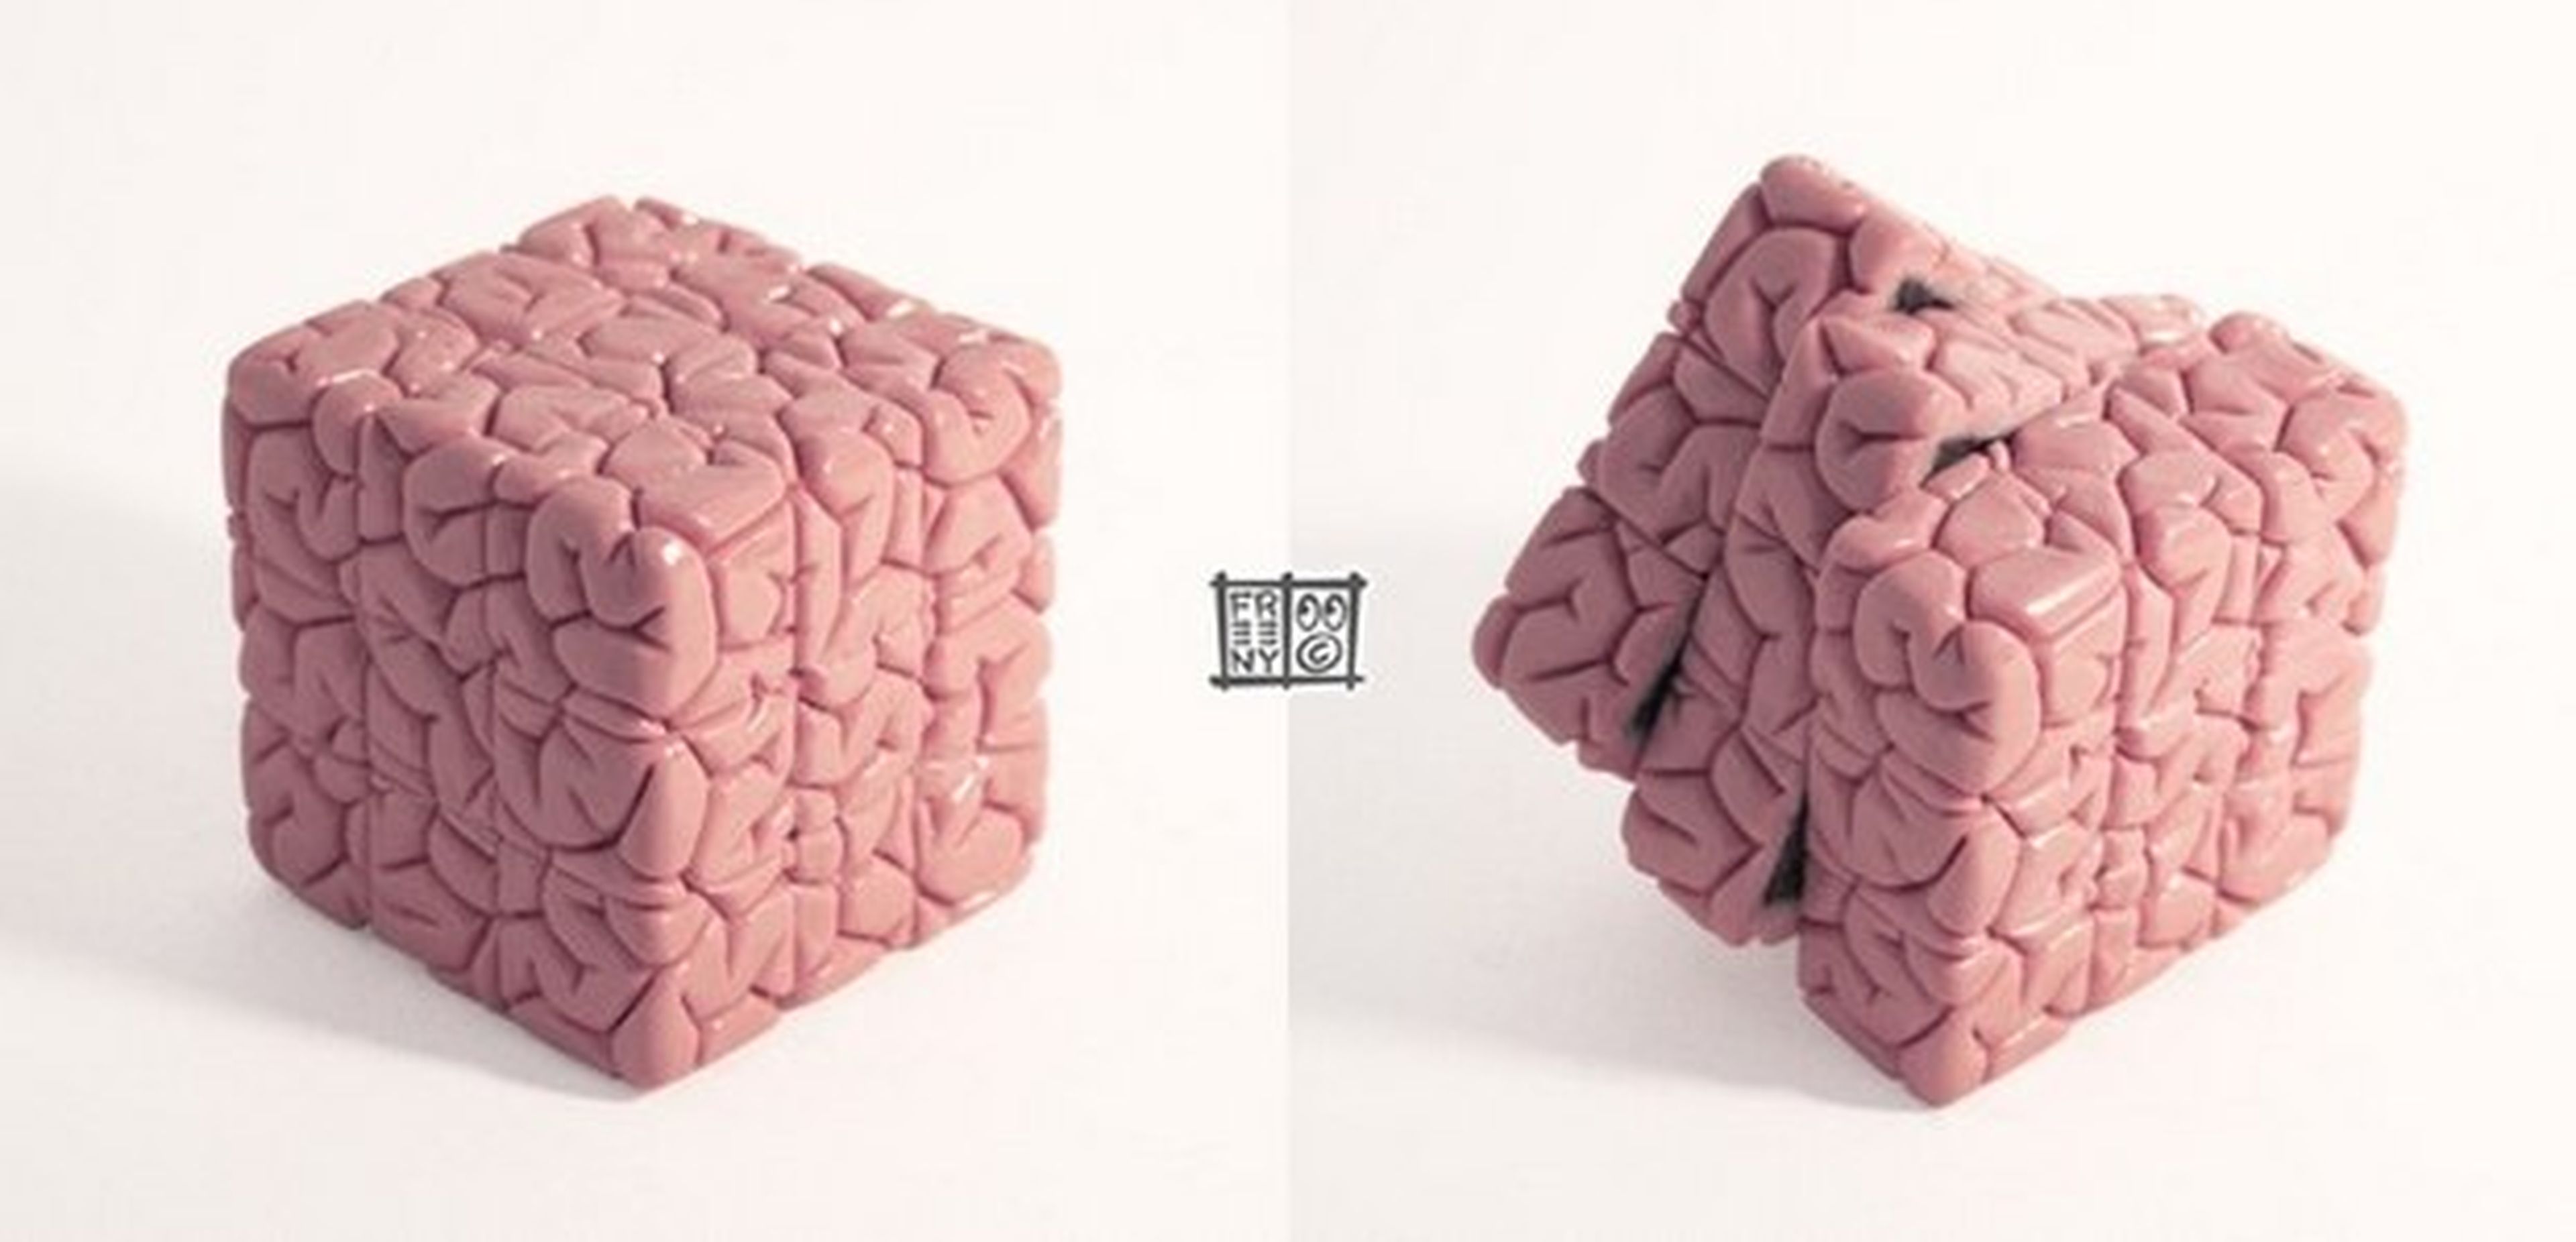 Cubo de Rubik cerebro